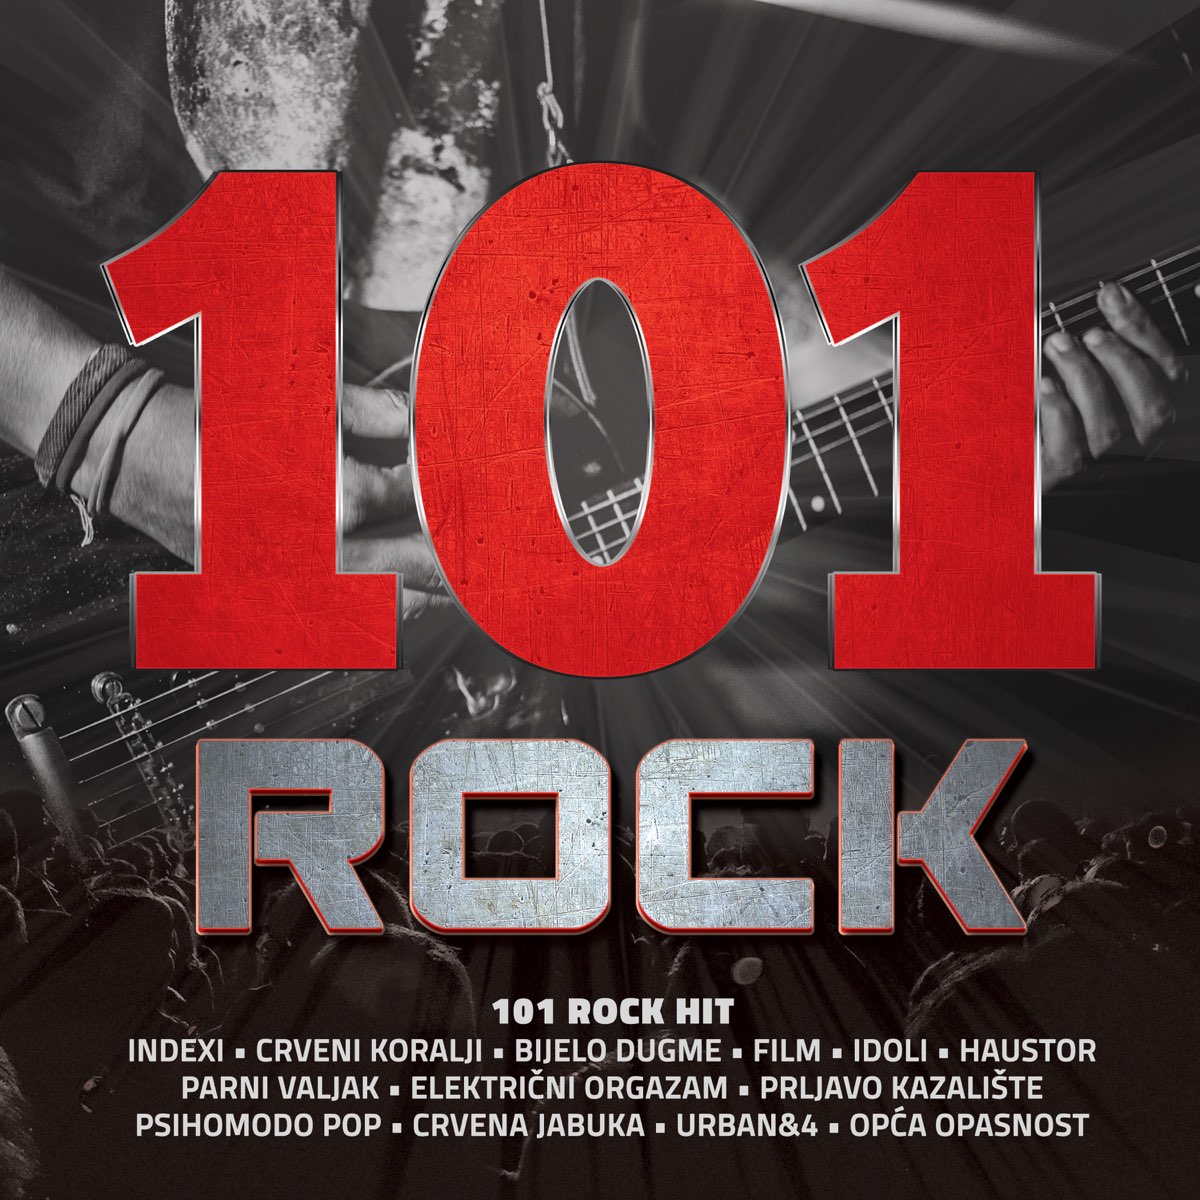 ‎101 Hit - Rock - Album by Razni Izvođači - Apple Music